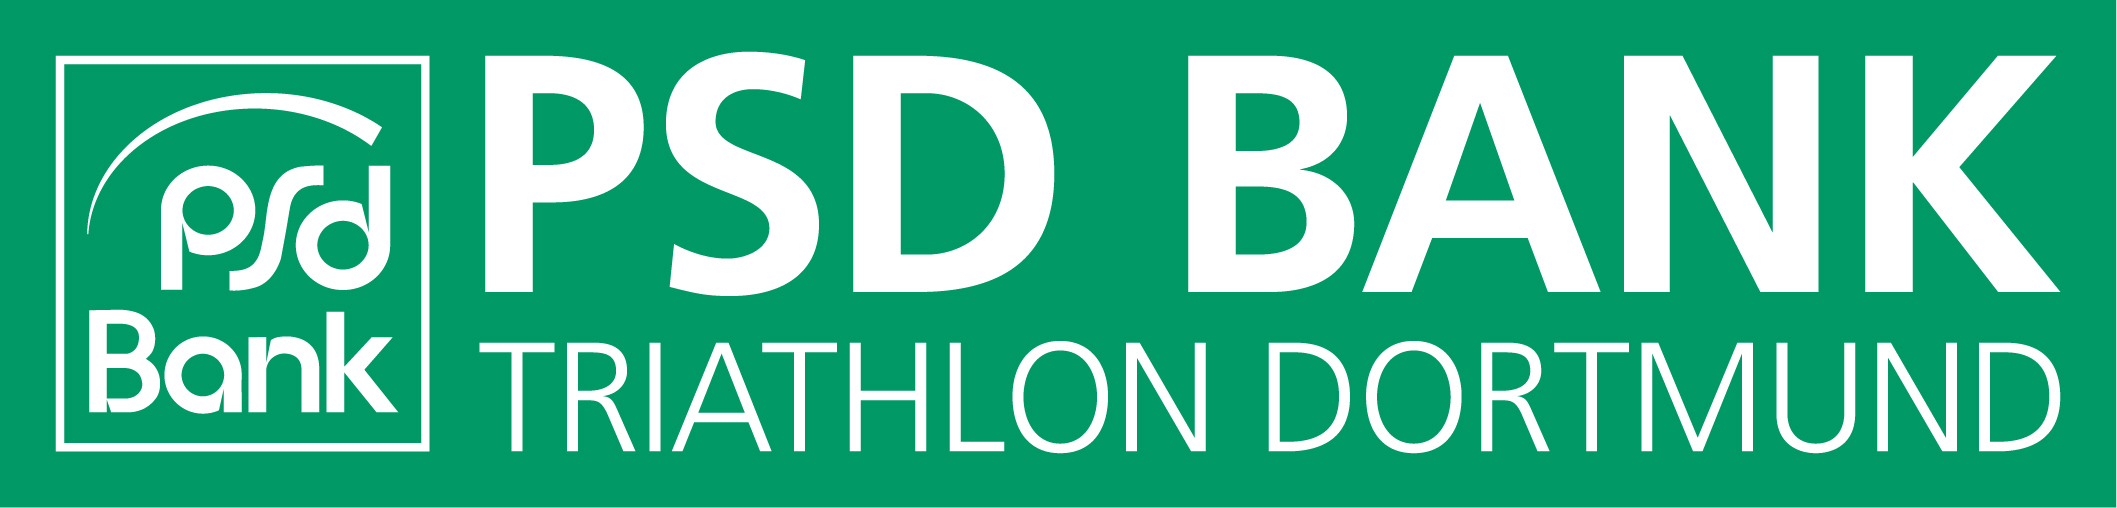 PSD Bank Triathlon Dortmund